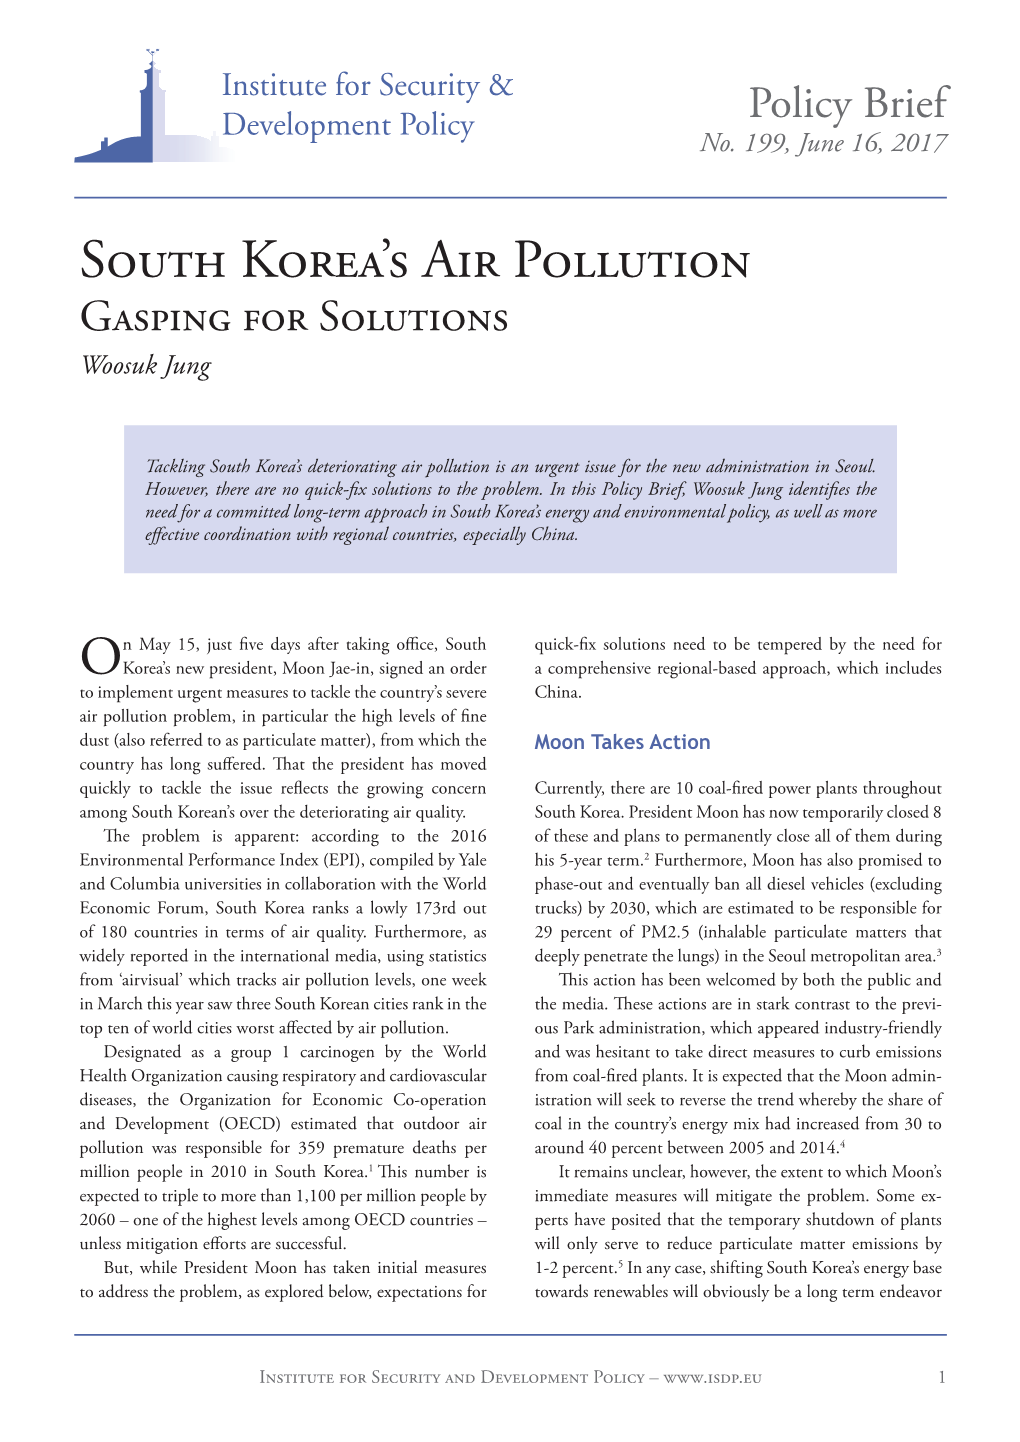 South Korea's Air Pollution